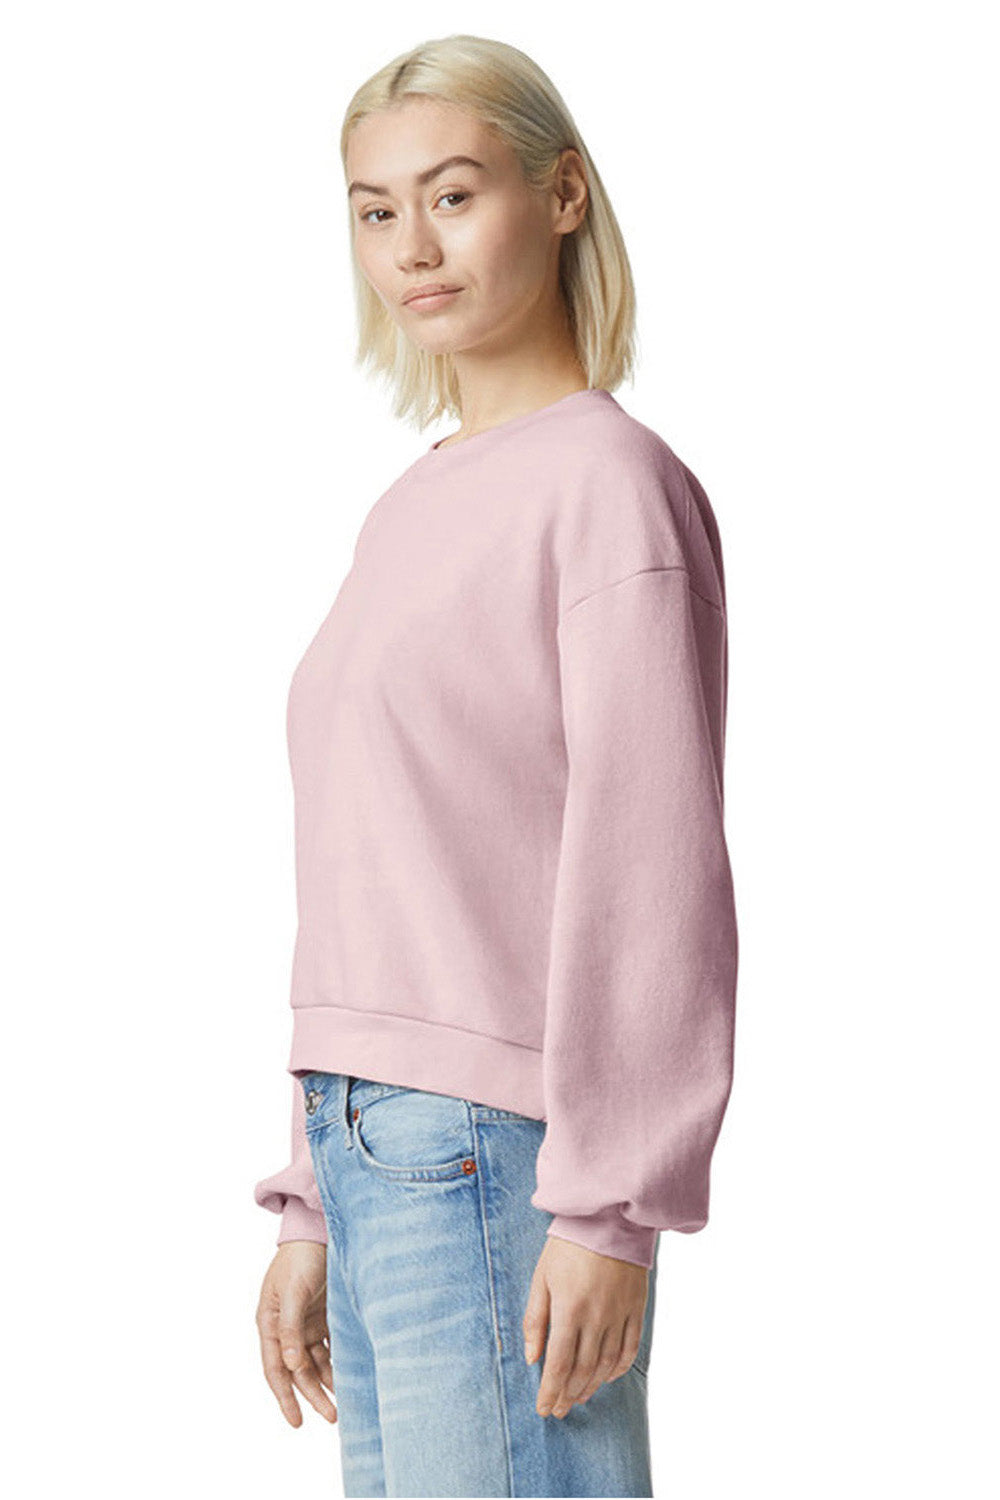 American Apparel RF494 Mens ReFlex Fleece Crewneck Sweatshirt Blush Pink Model Side